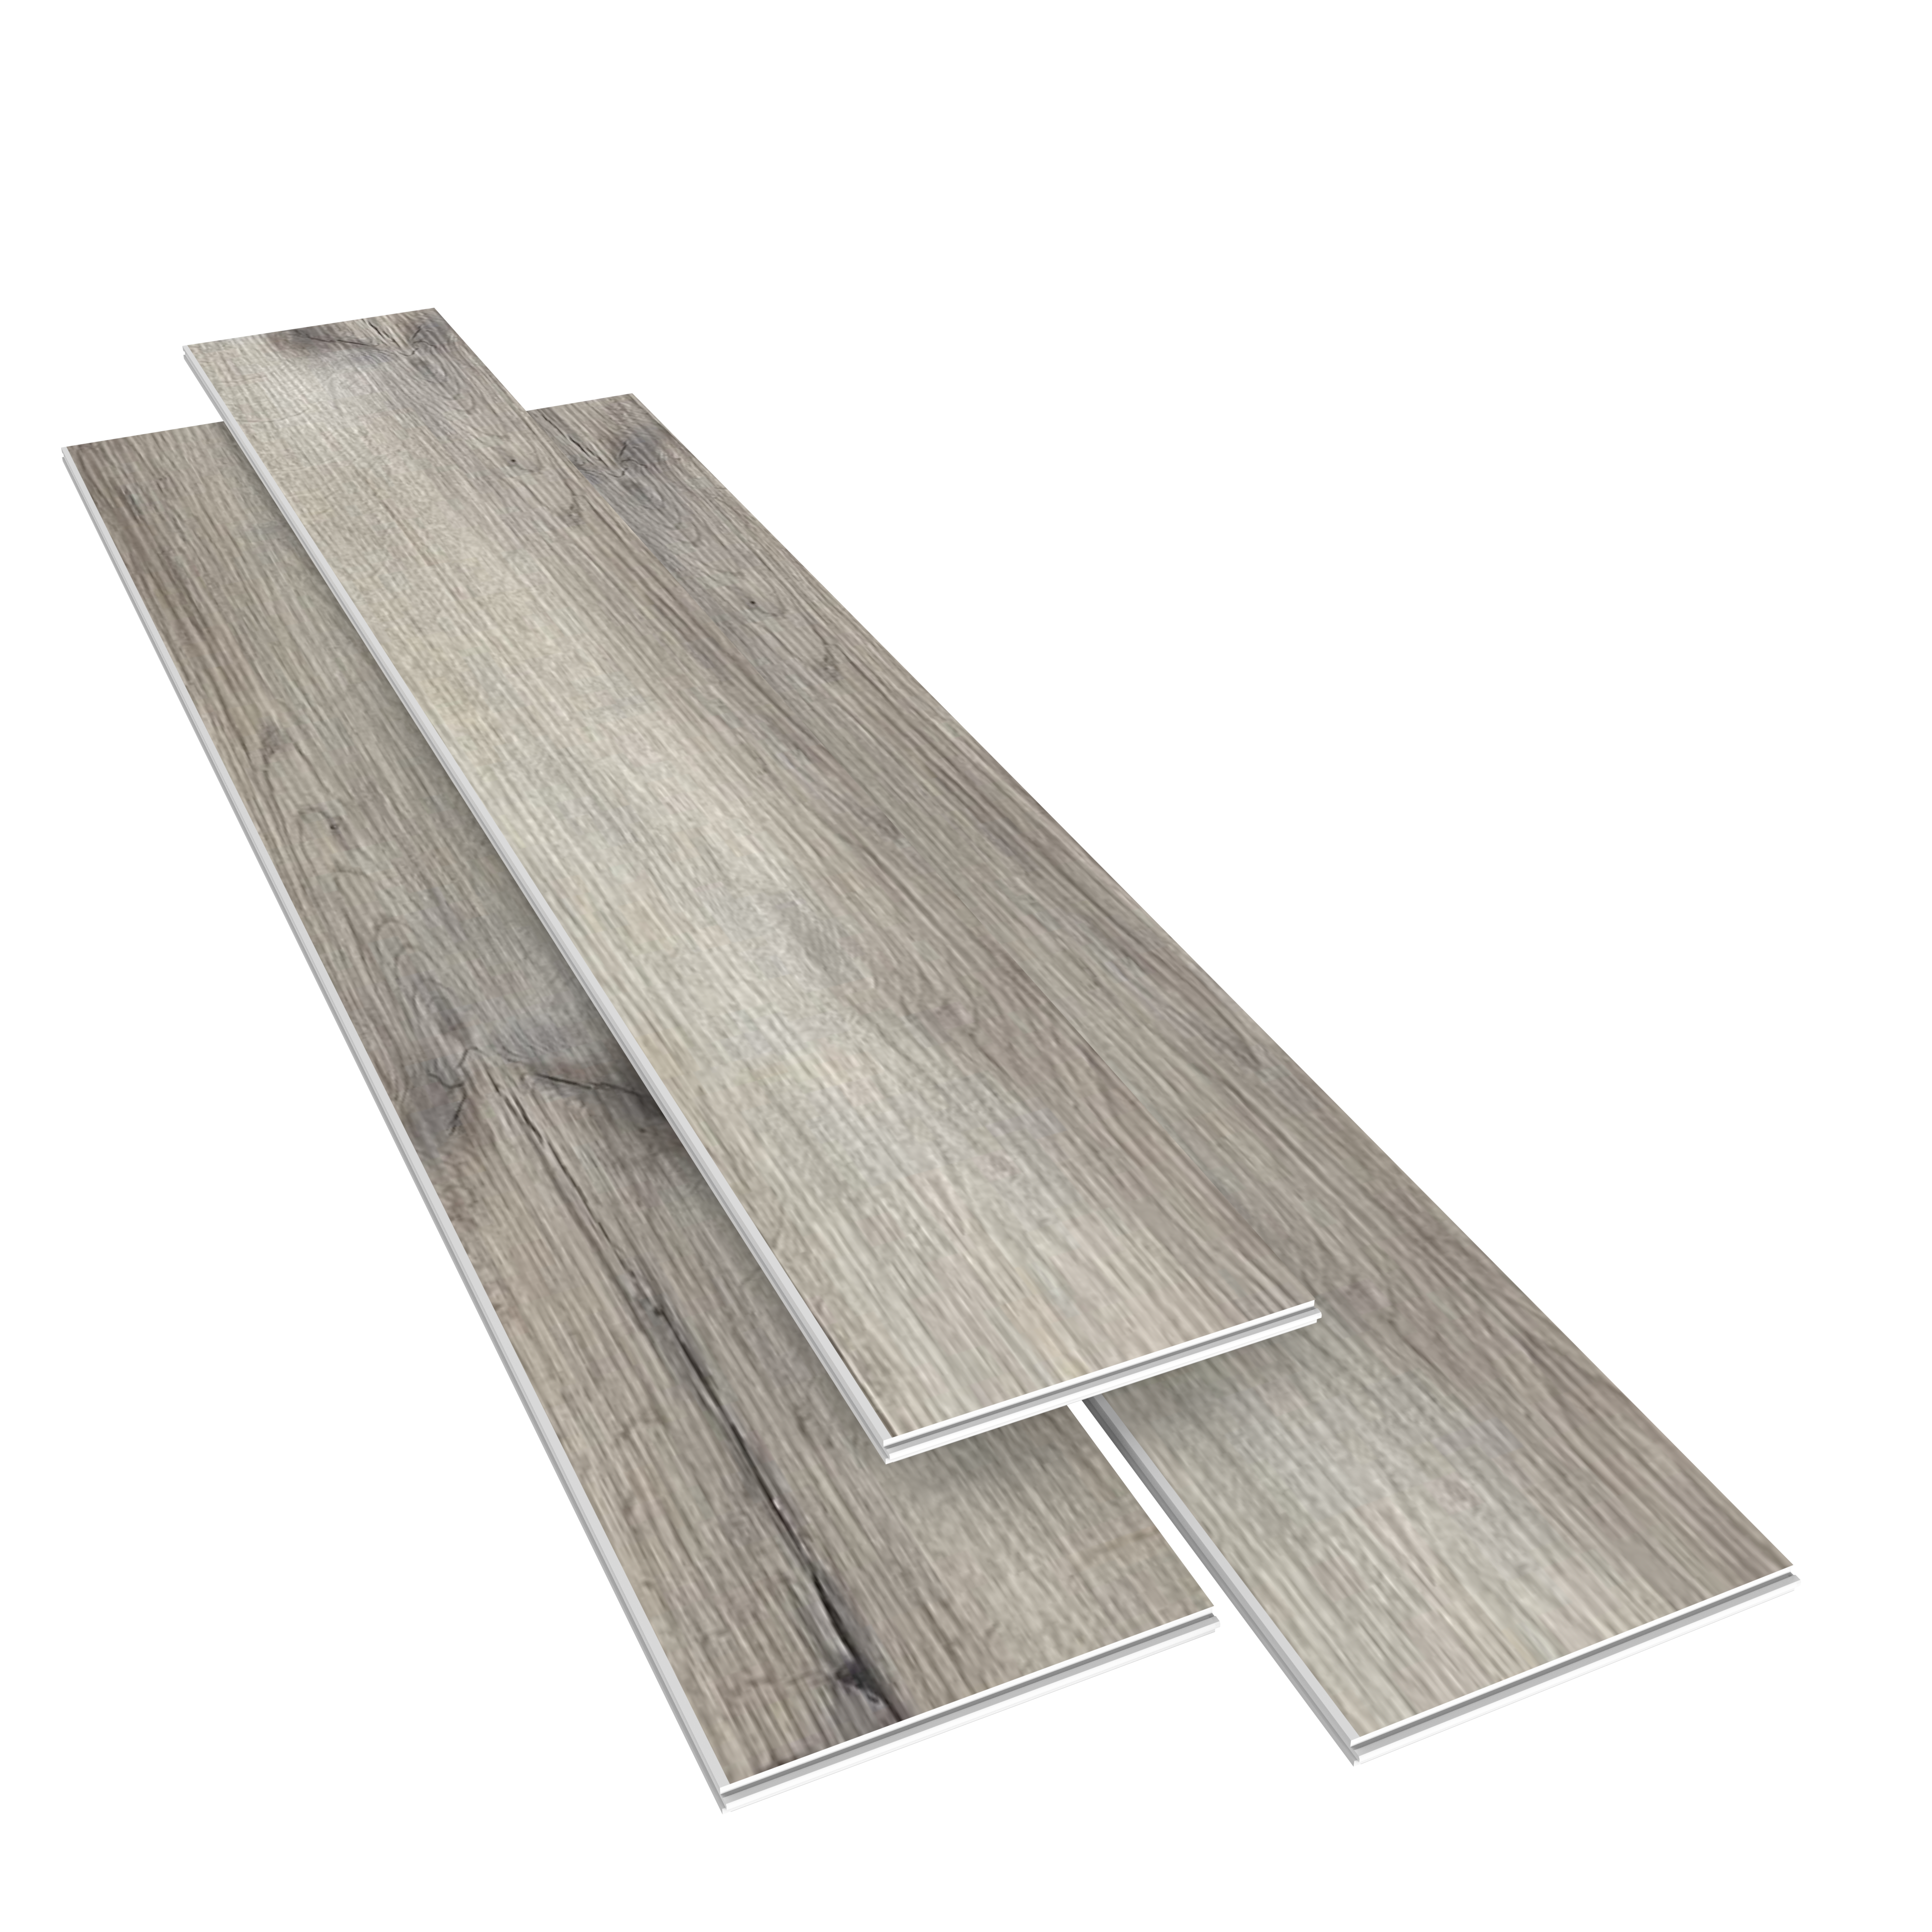 SPC Rigid Core Plank Beach Flooring, 7" x 48" x 6mm, 22 mil Wear Layer